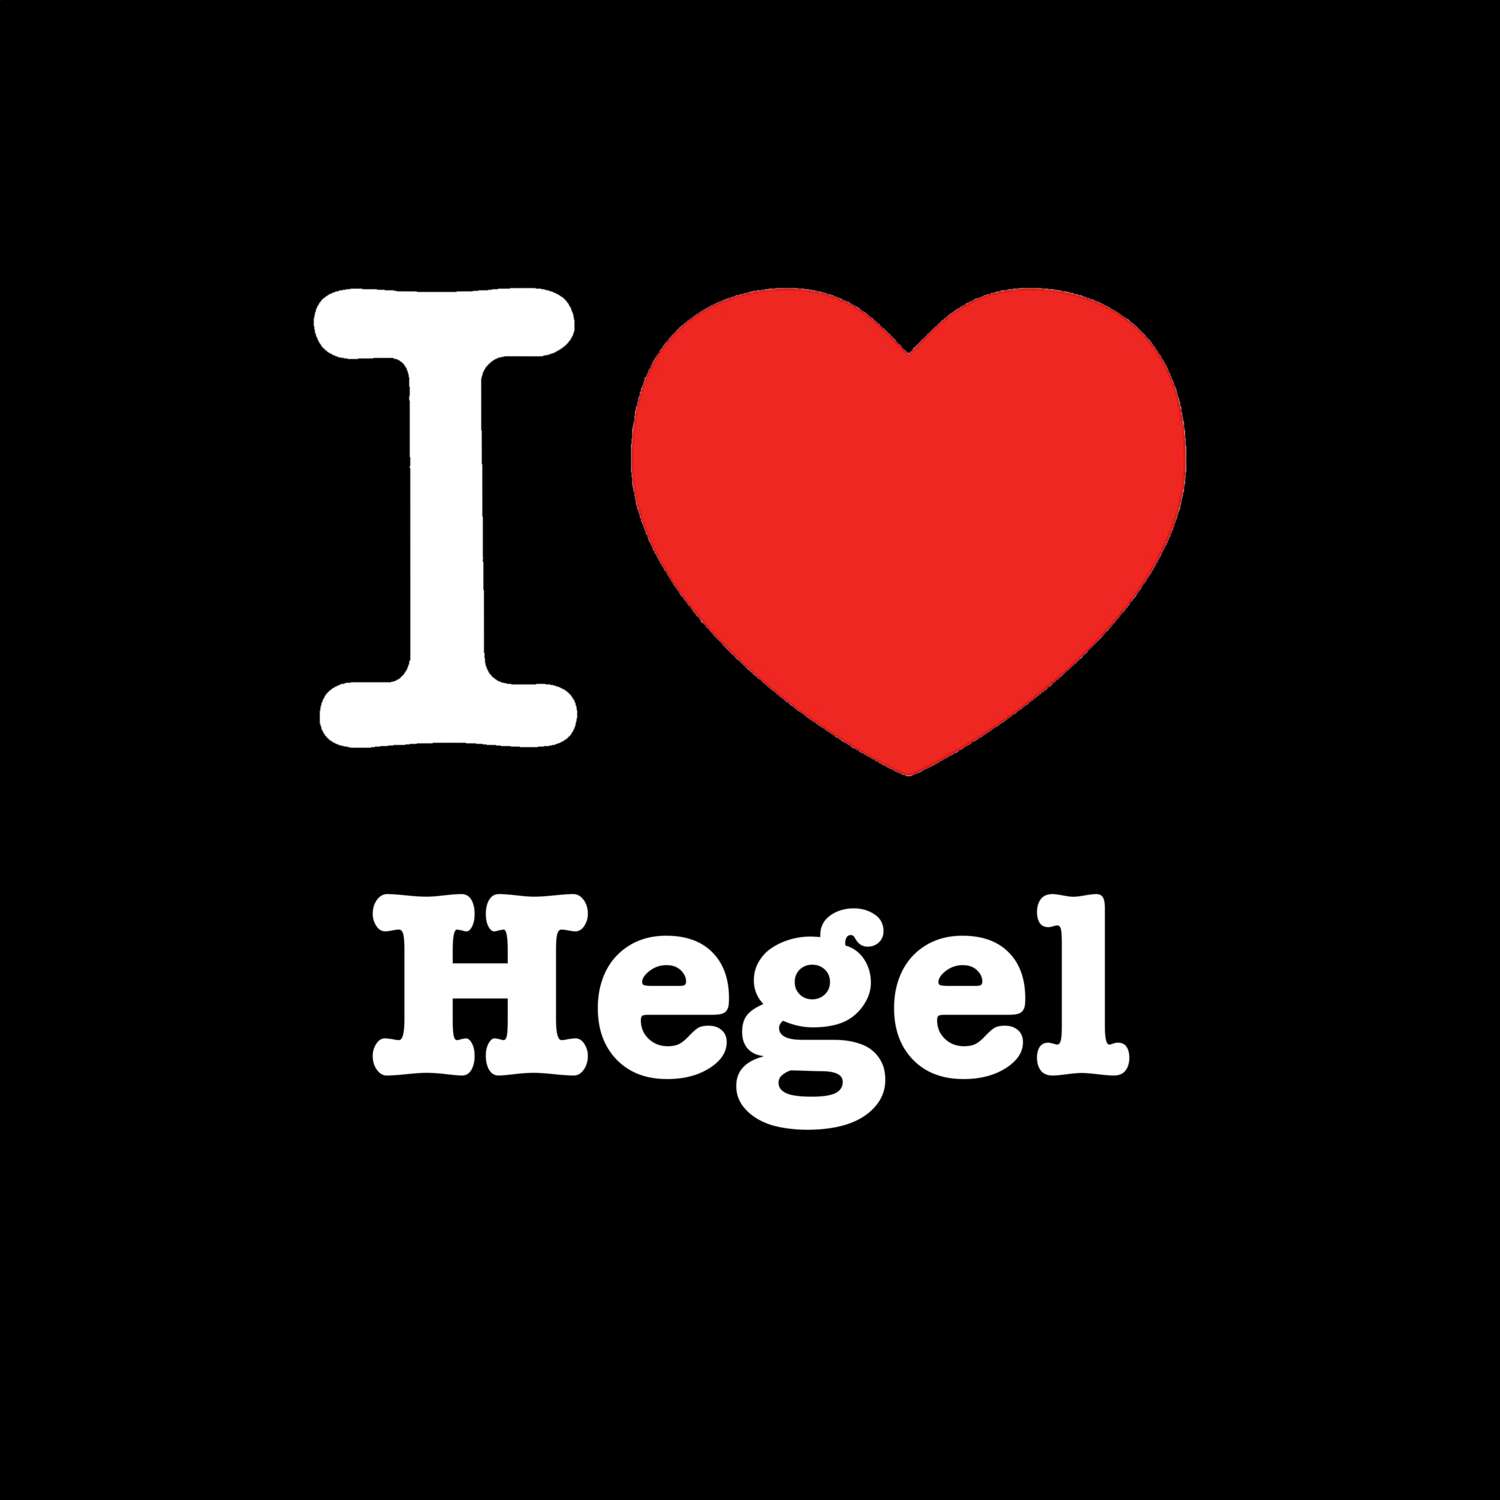 Hegel T-Shirt »I love«